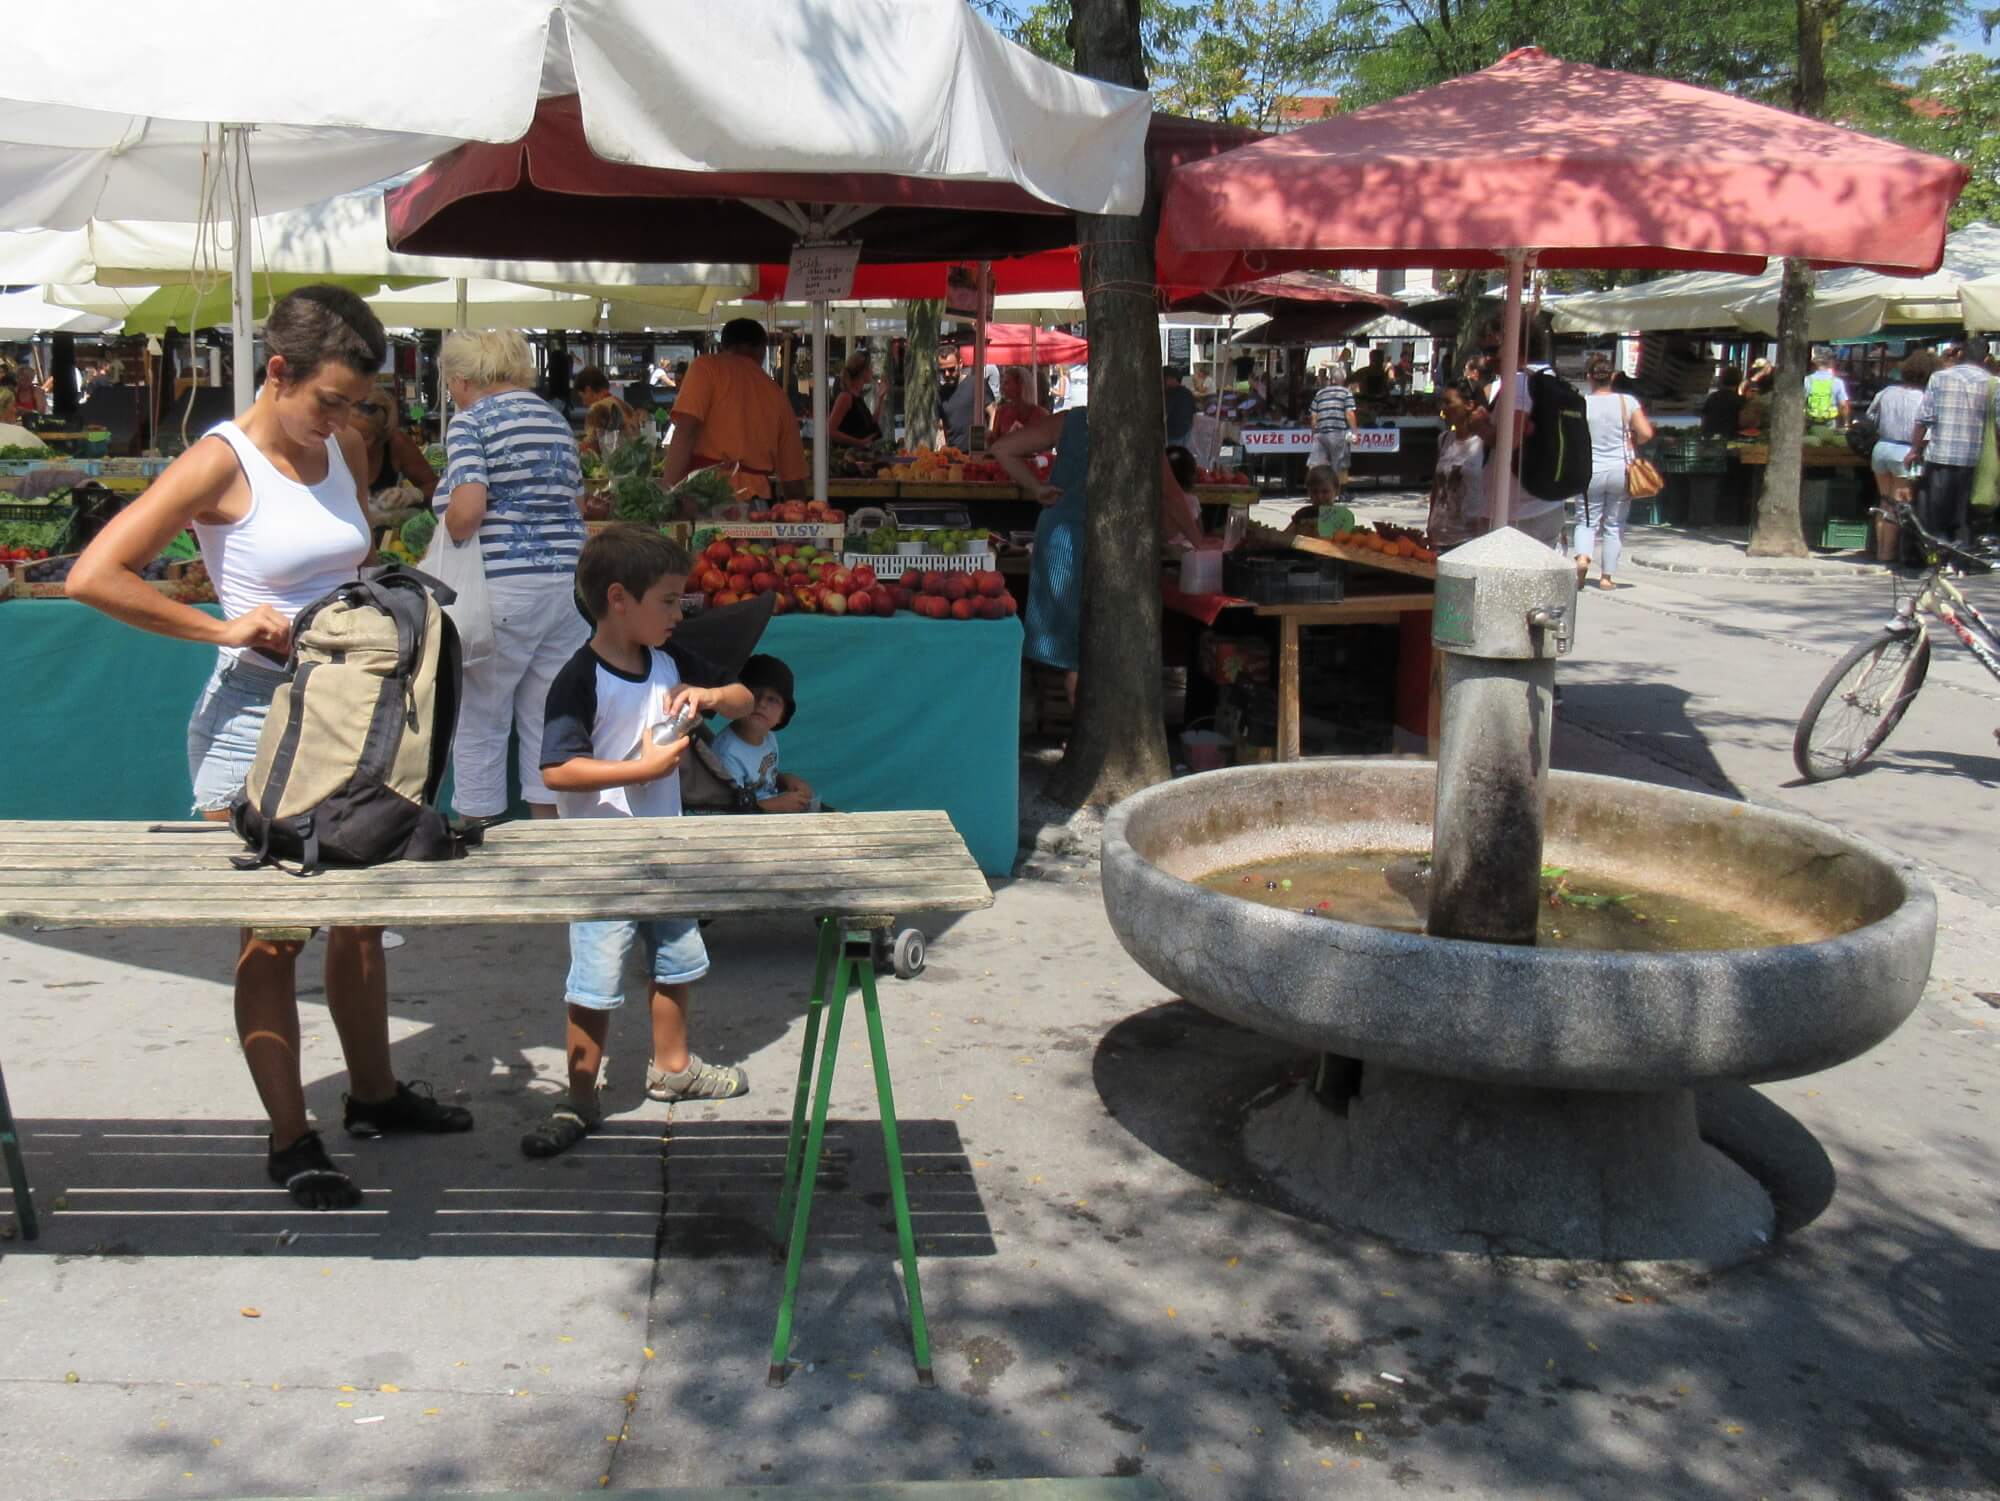 jl flanner august 2019 ljubljana market fountain.jpg